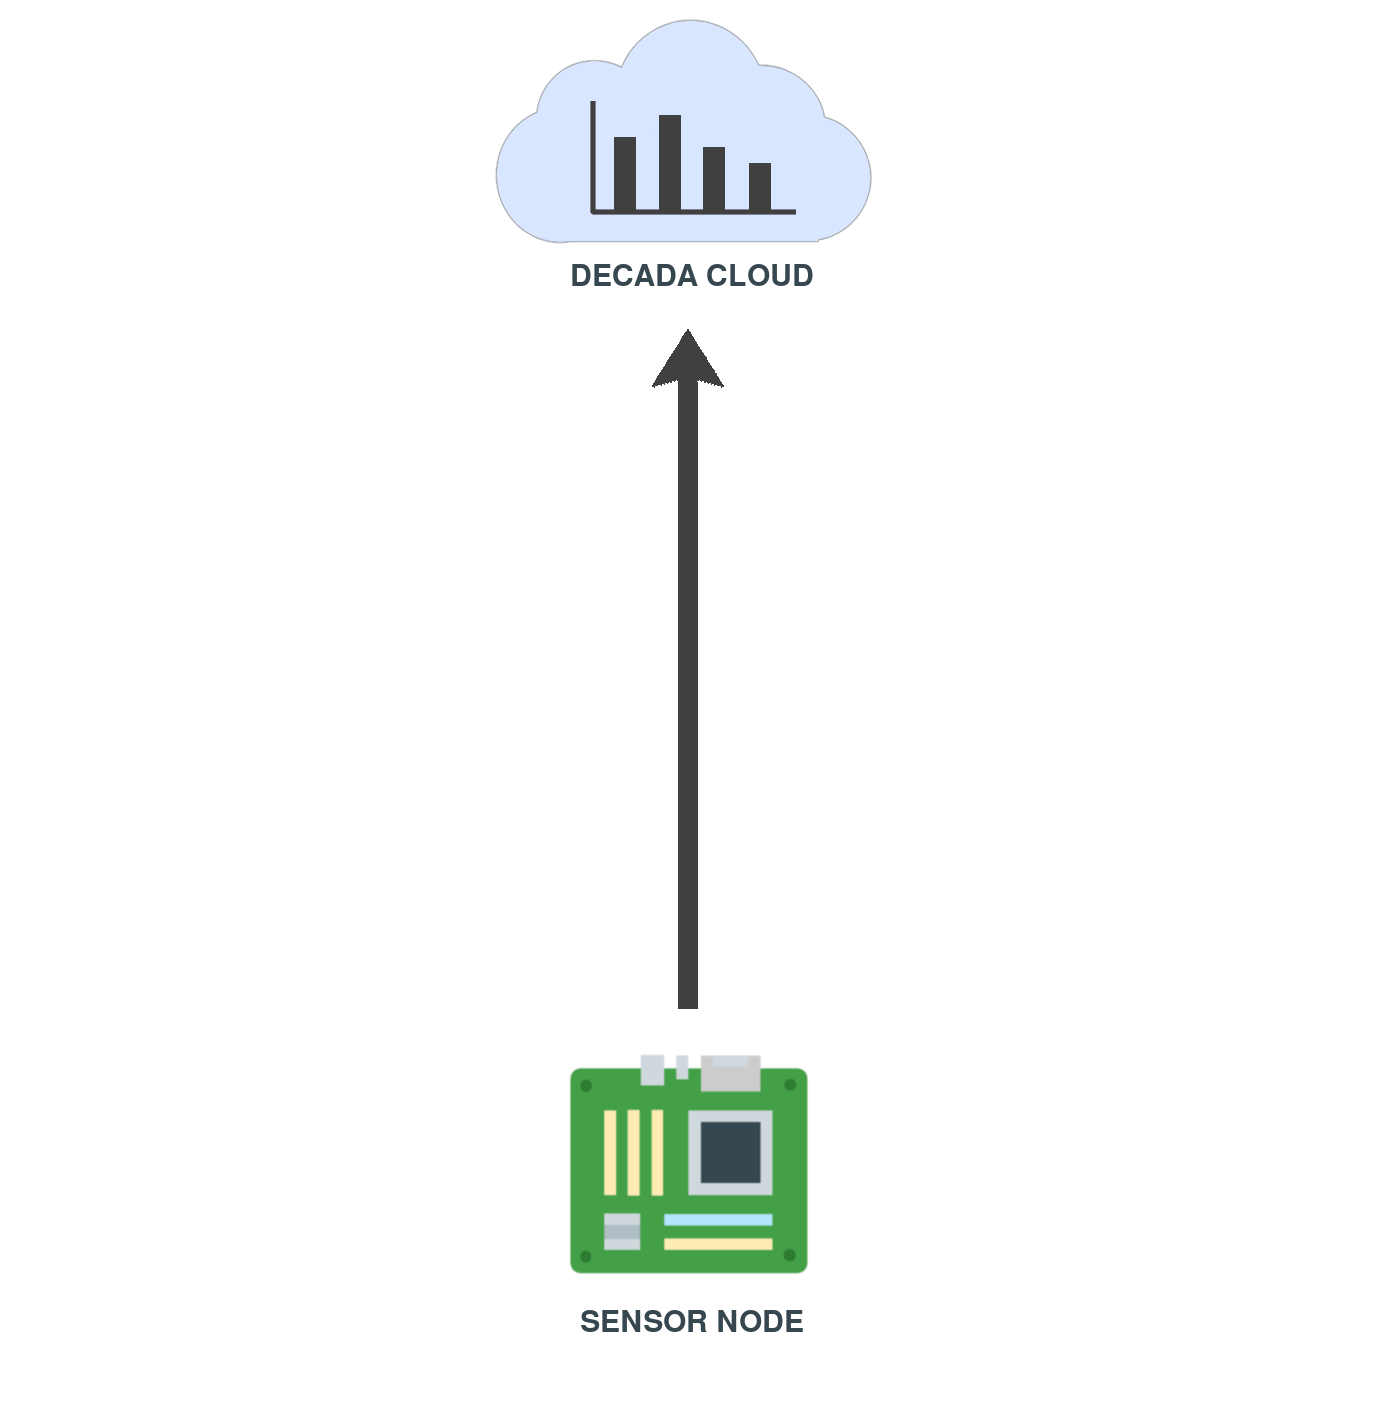 Fig 2: Sending data from DECADA Embedded to DECADA Cloud